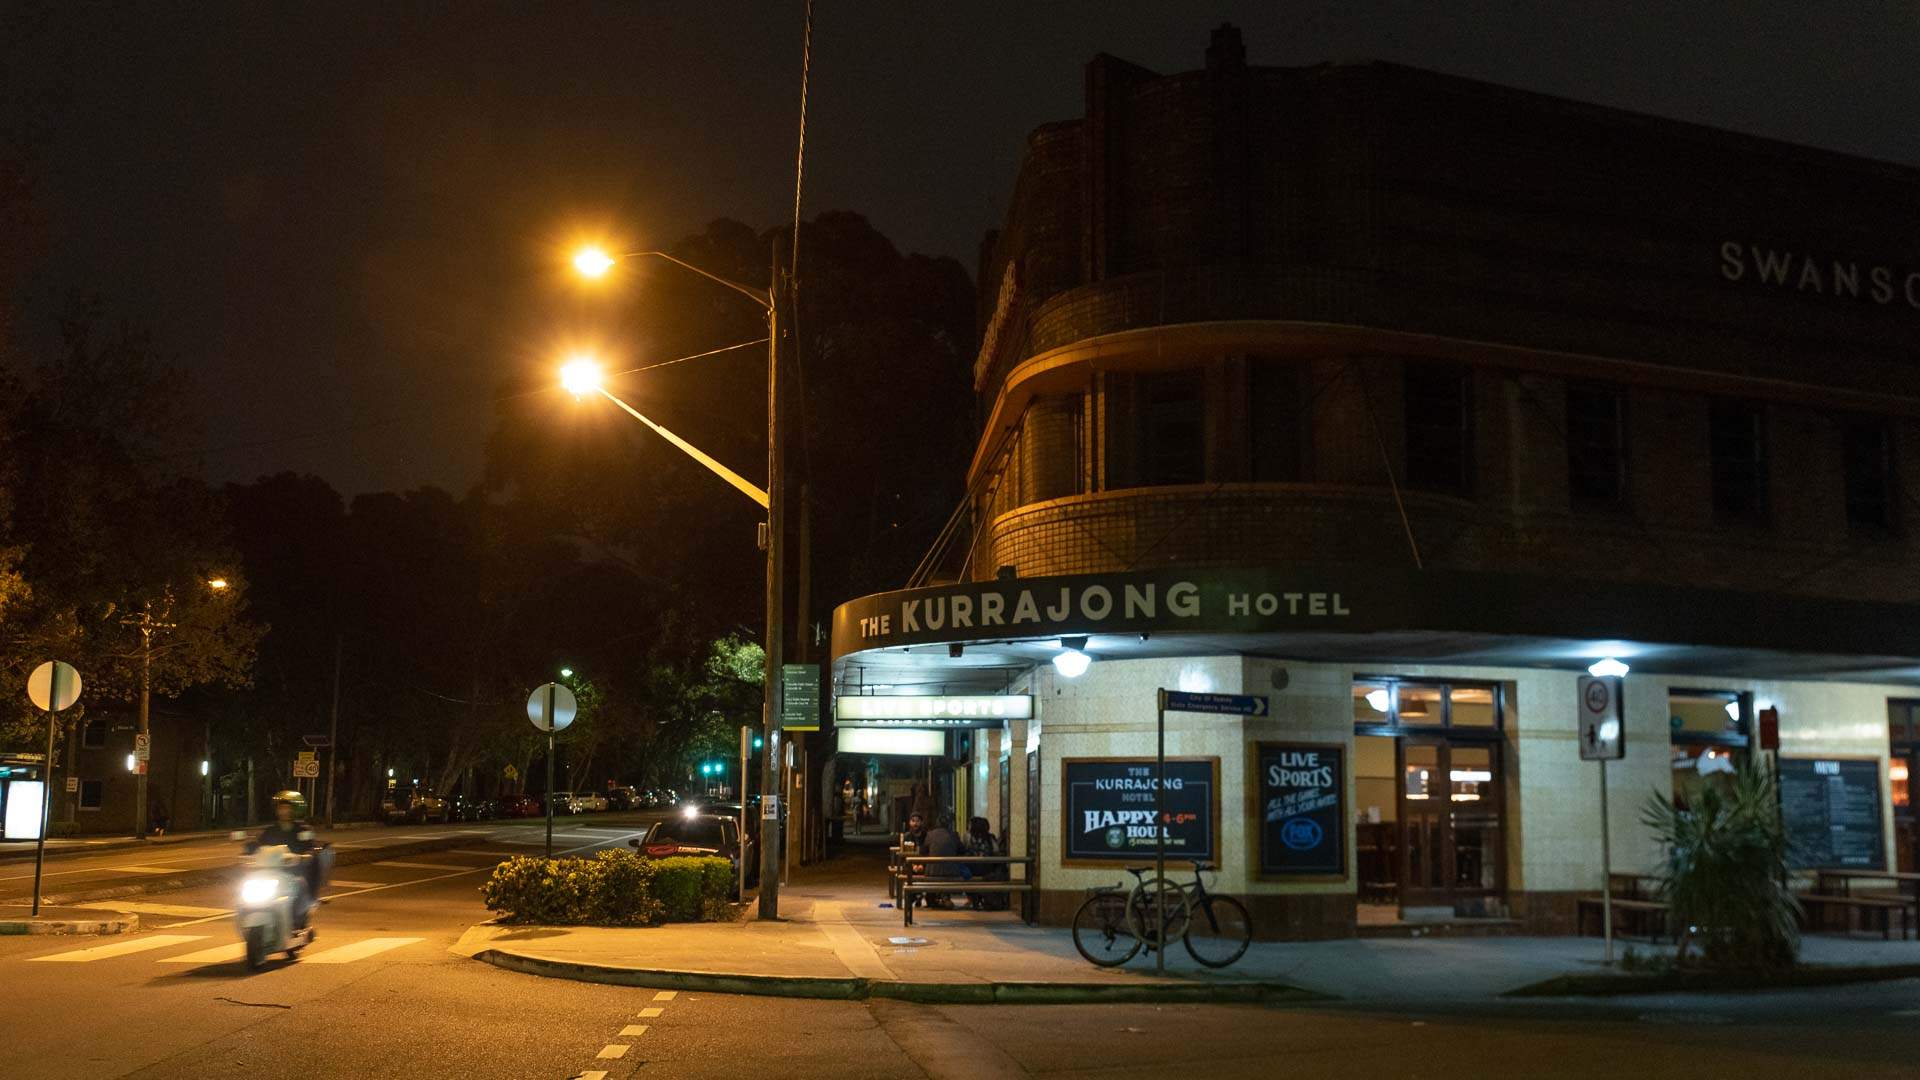 The Kurrajong Hotel